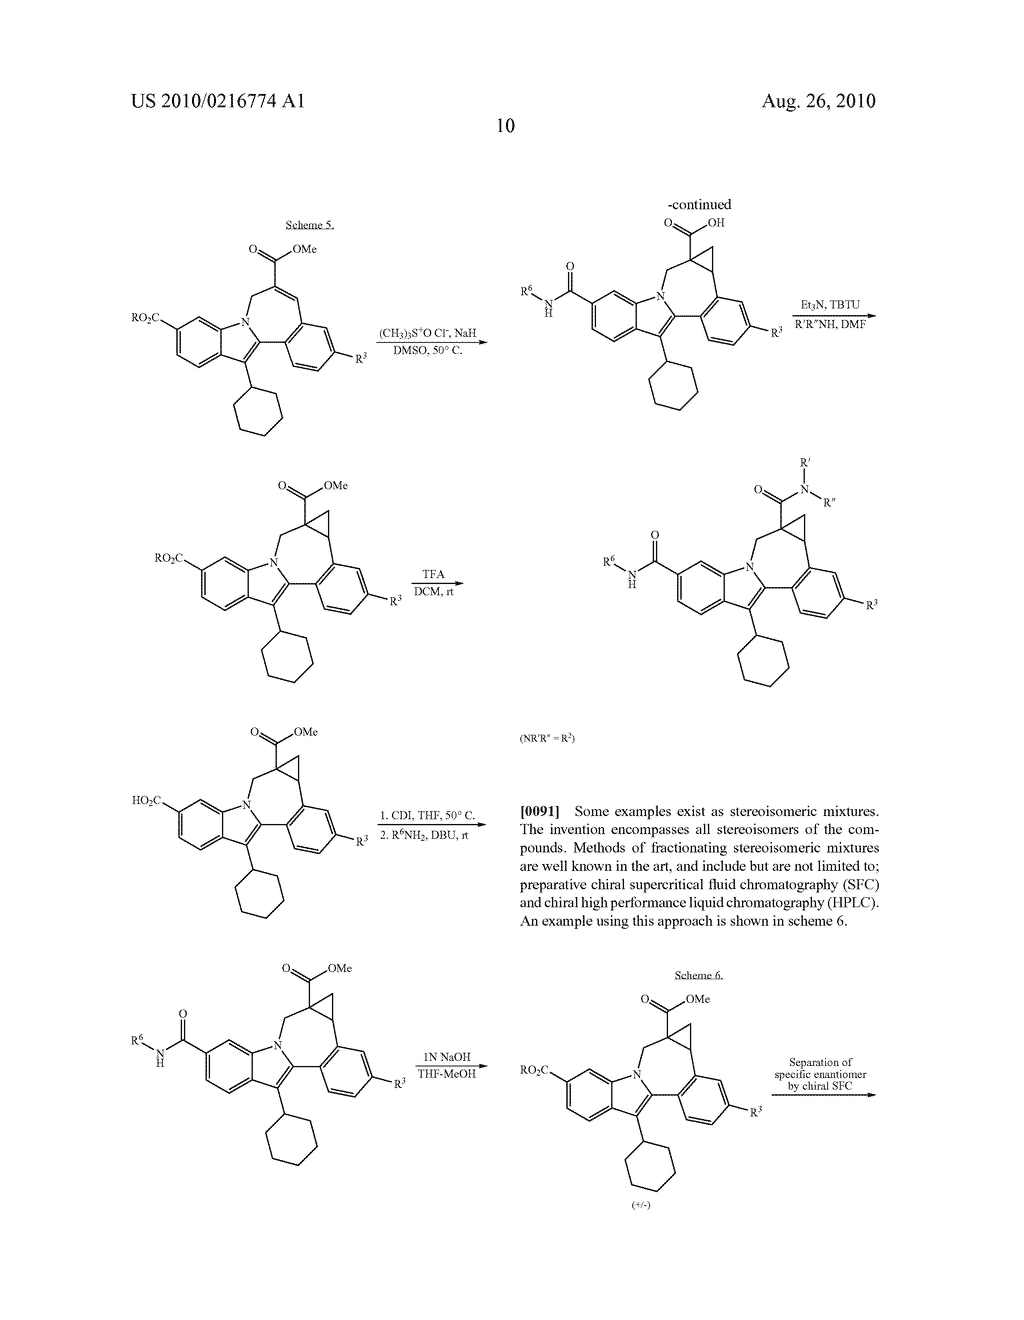 Cyclopropyl Fused Indolobenzazepine HCV NS5B Inhibitors - diagram, schematic, and image 11